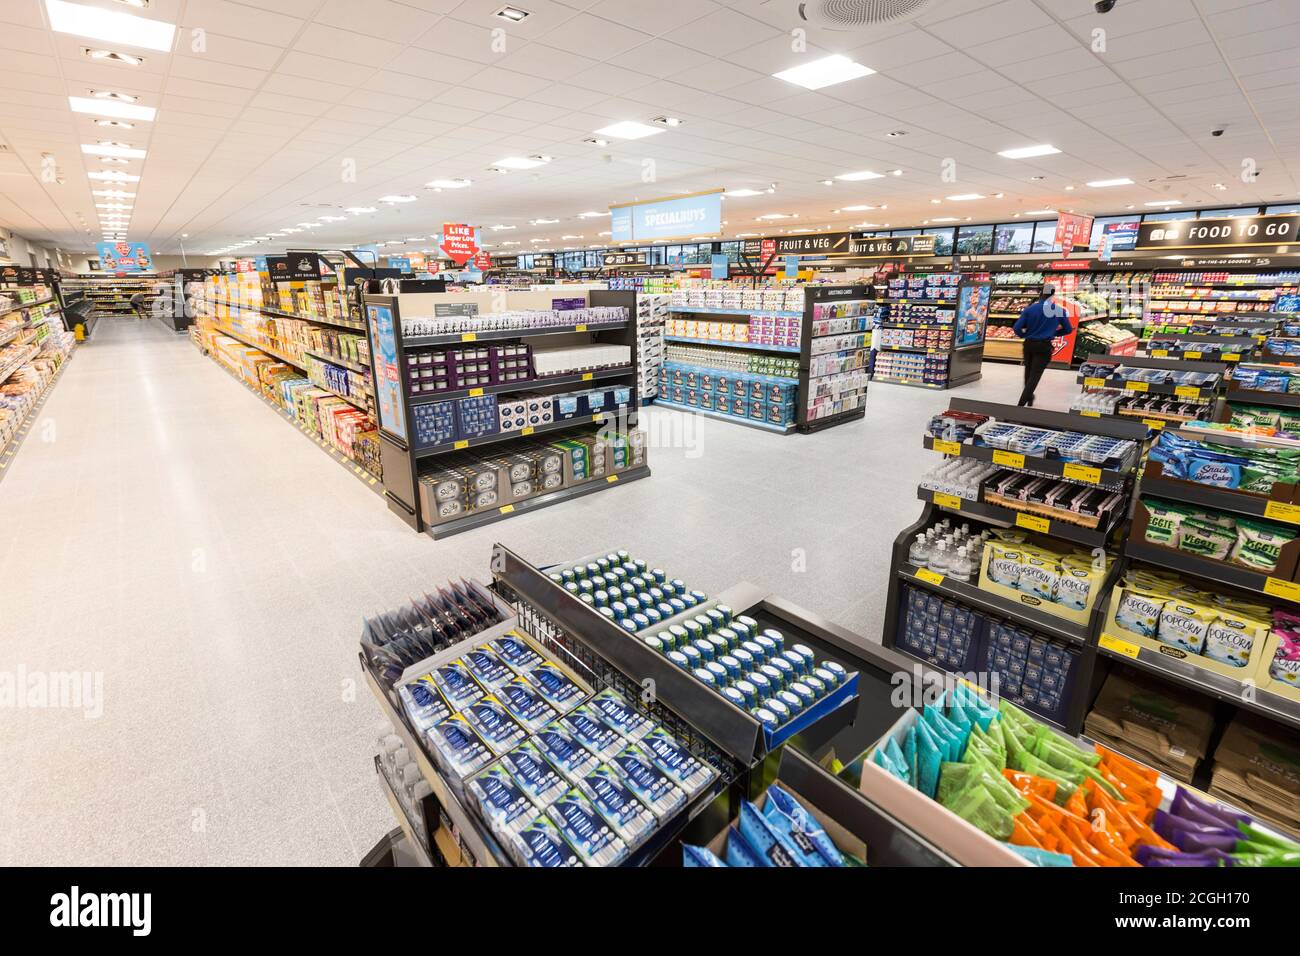 Aldi Supermarket interior Stock Photo